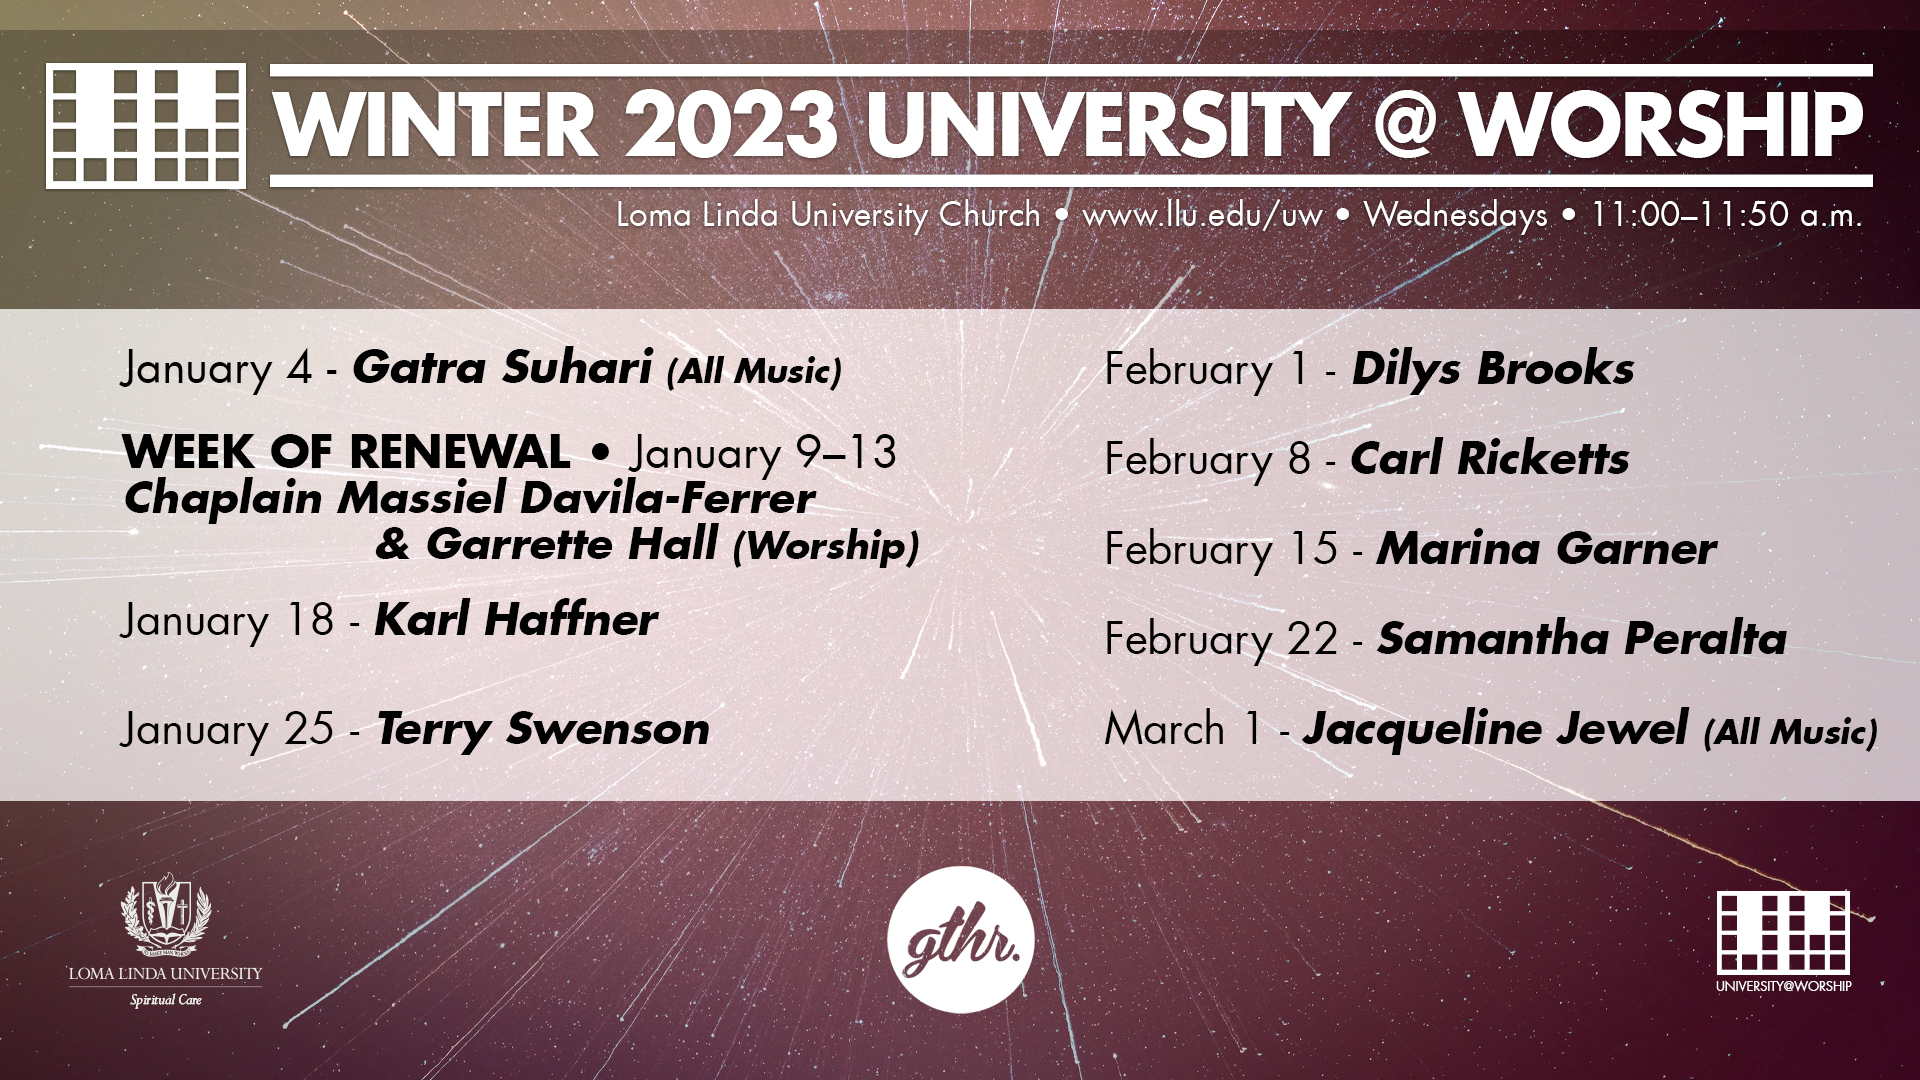 2023 Winter University@Worship Dates